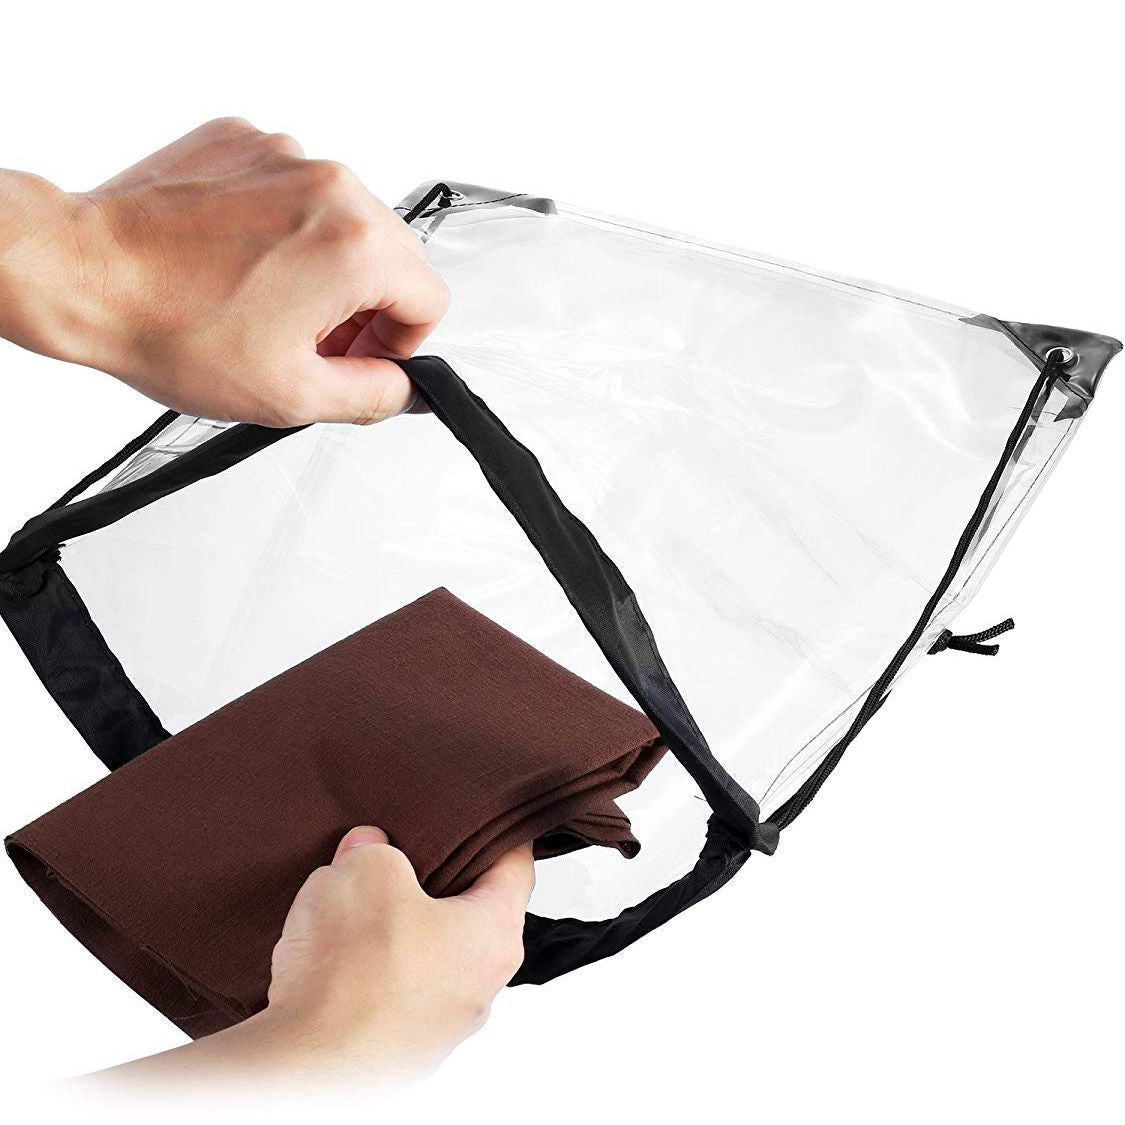 5 Pack Transparent Drawstring Bag Clear Cinch Bags Traveling Sport Bags (Black Edge) - ebowsos